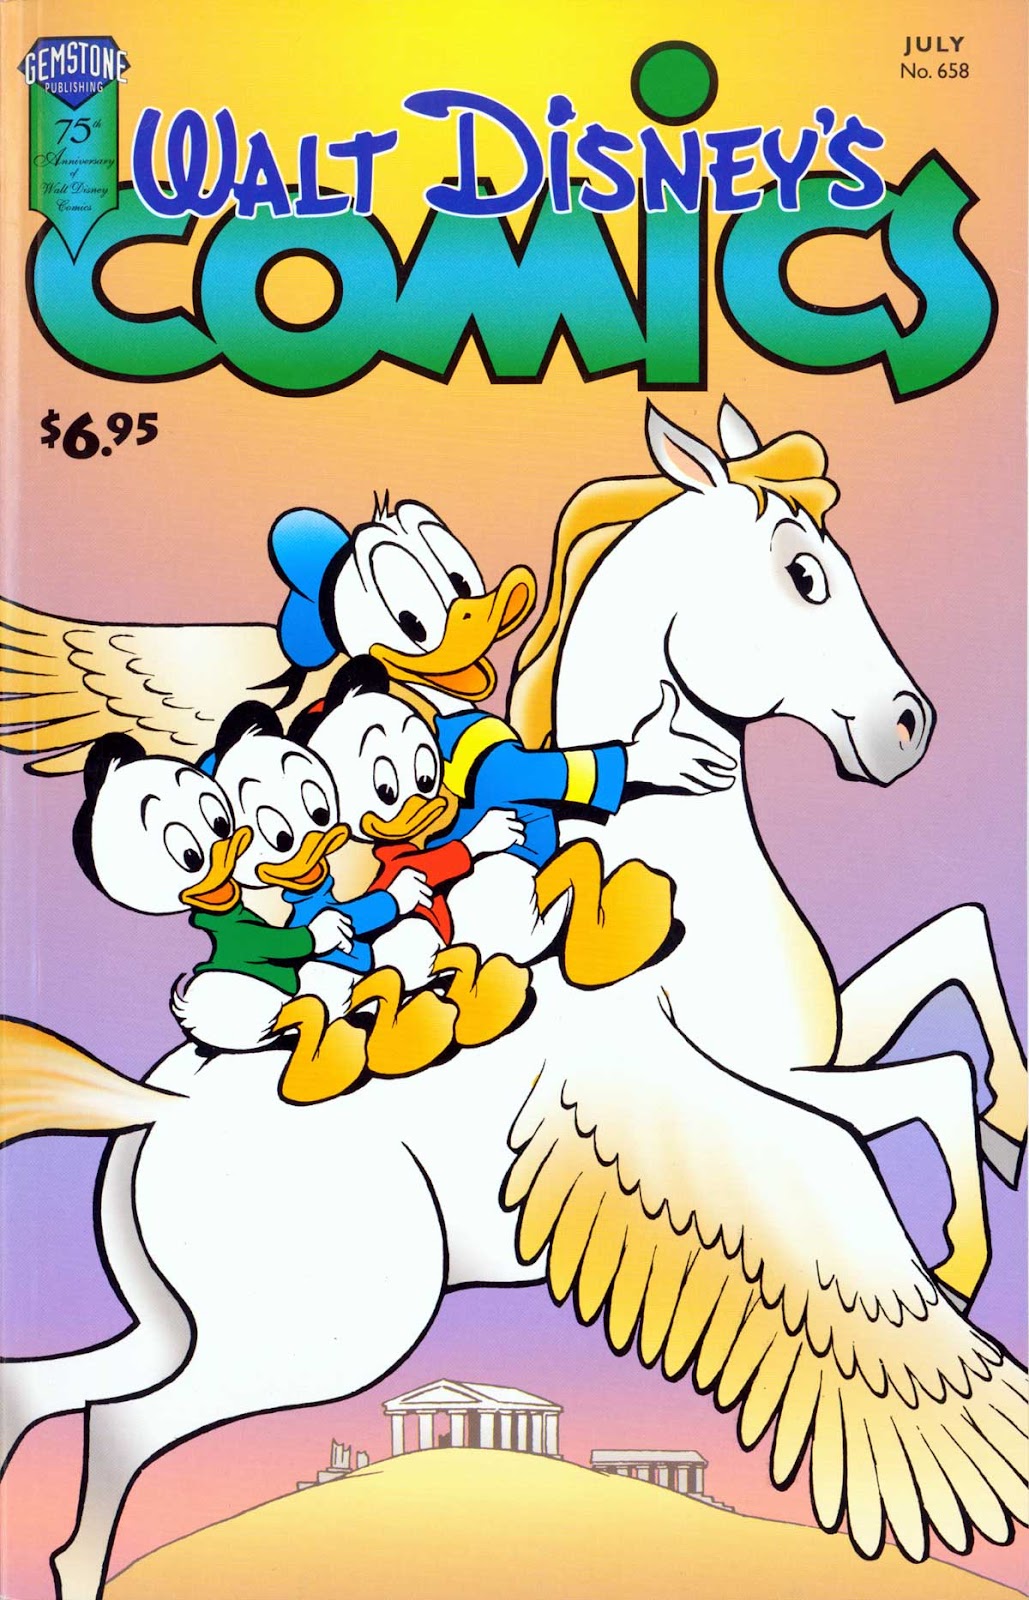 Walt Disneys Comics and Stories 658 Page 1